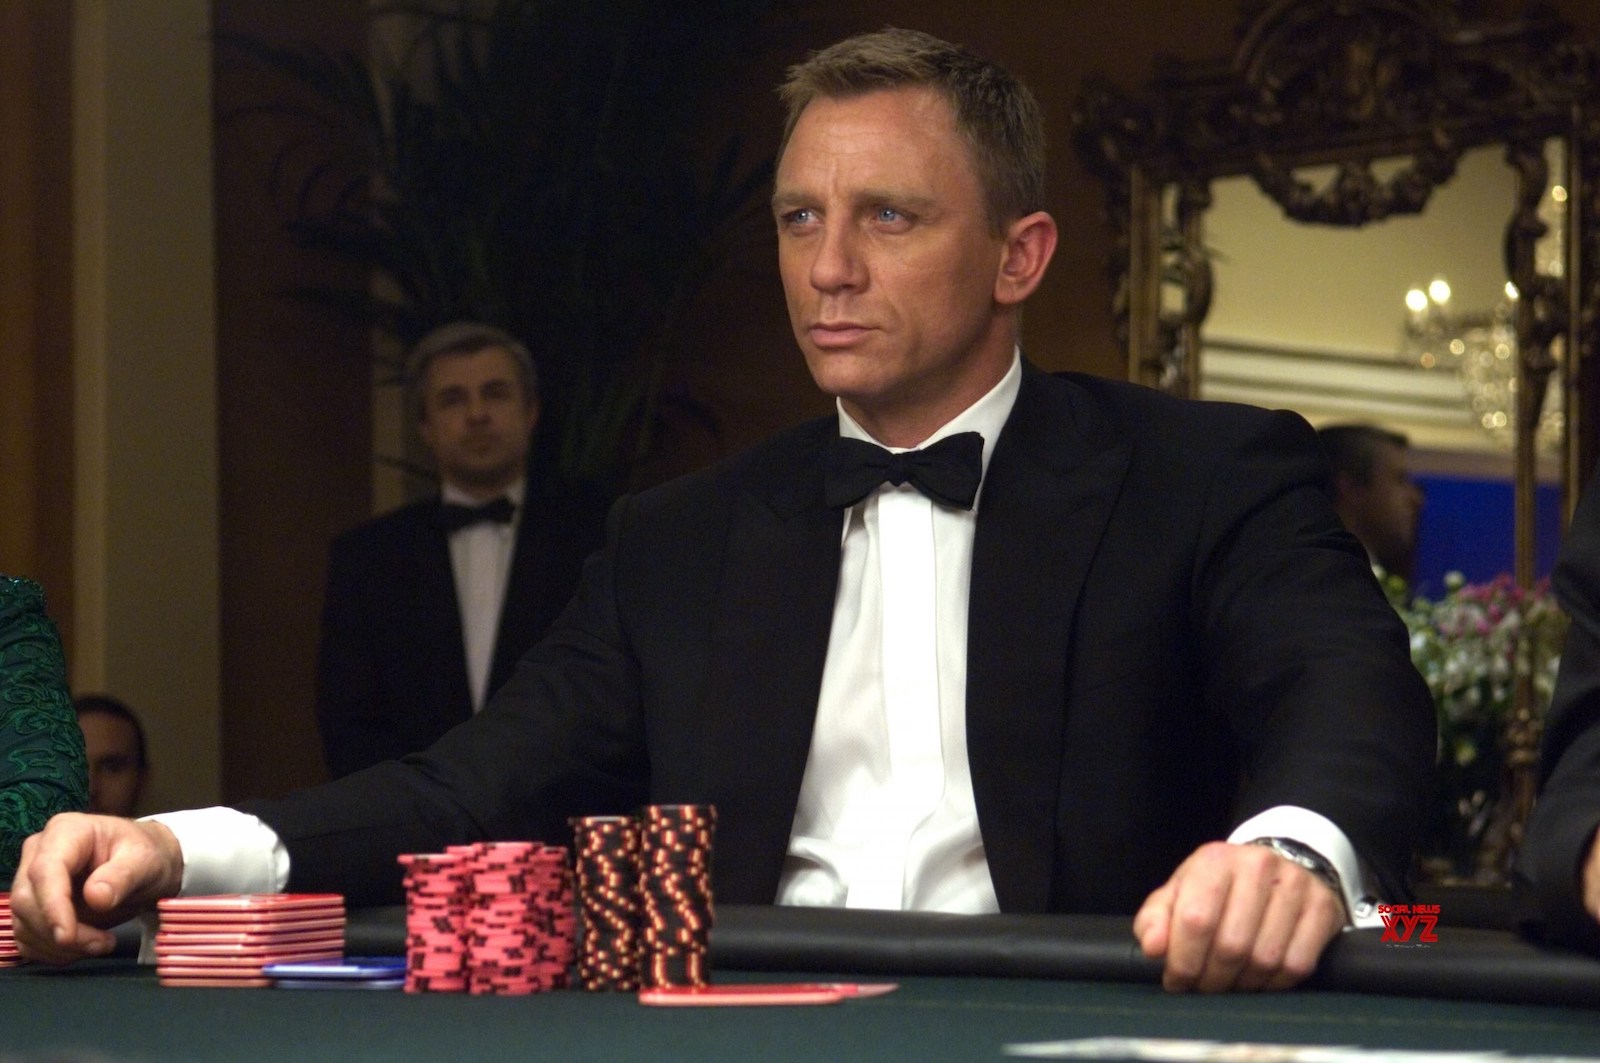 james bond movies casino royale online